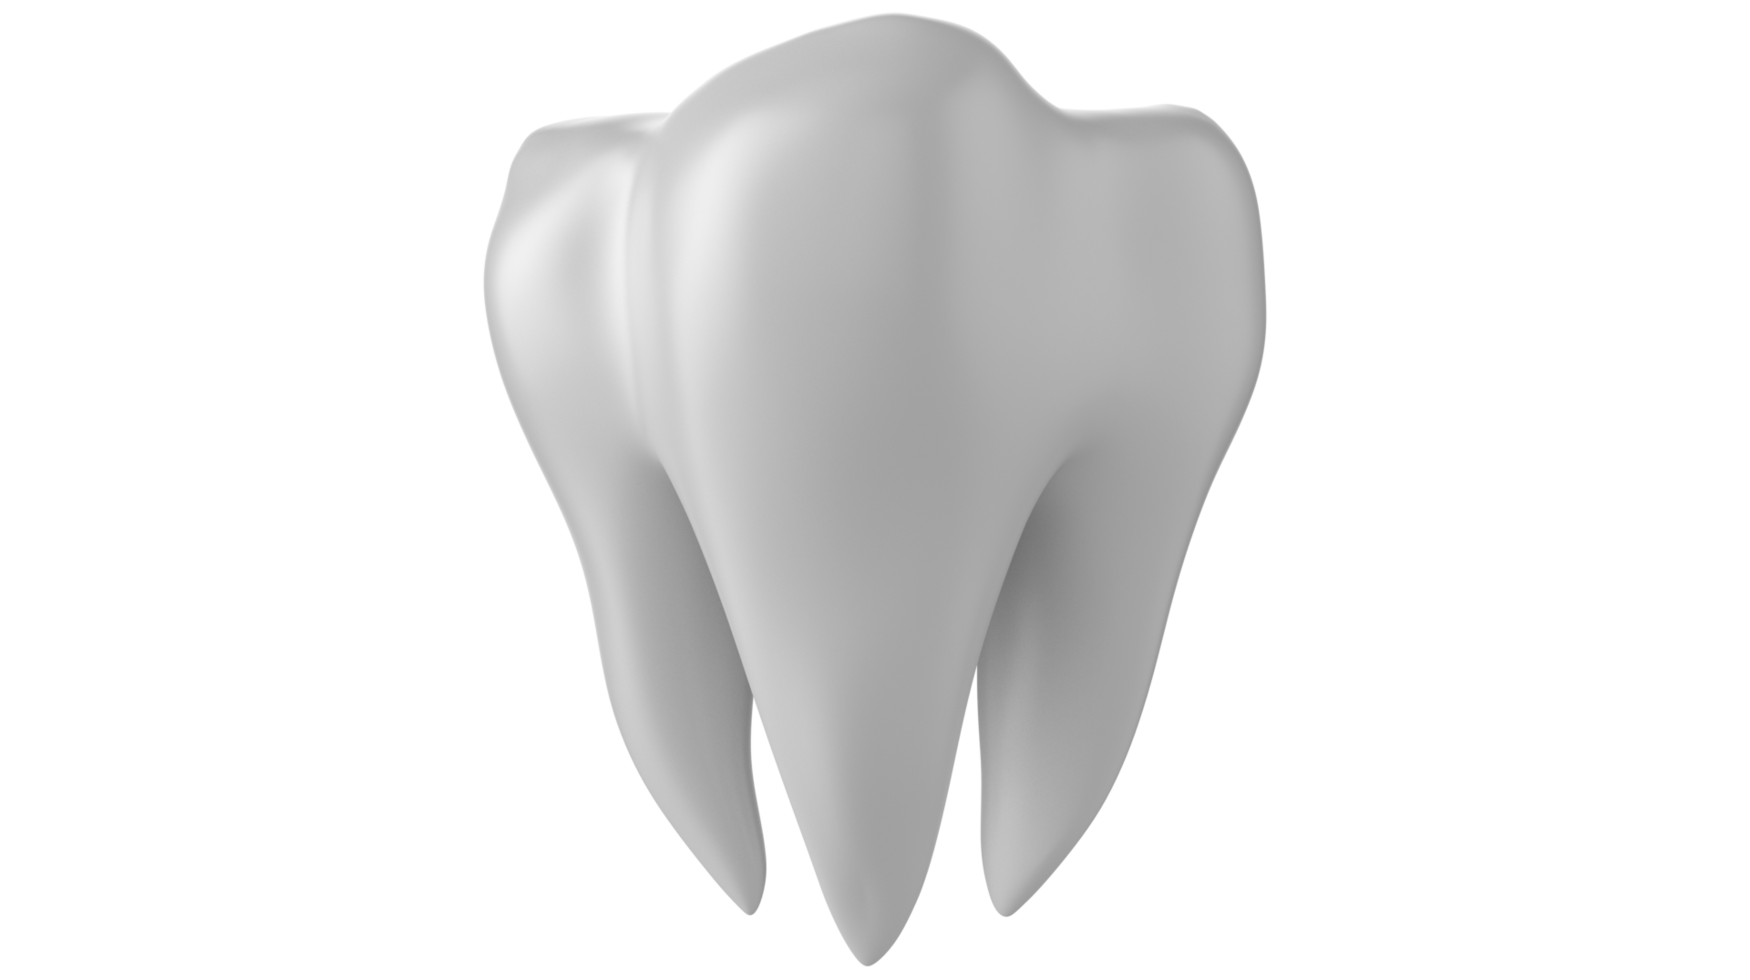 3d dental tänder isolerat på transparent bakgrund png